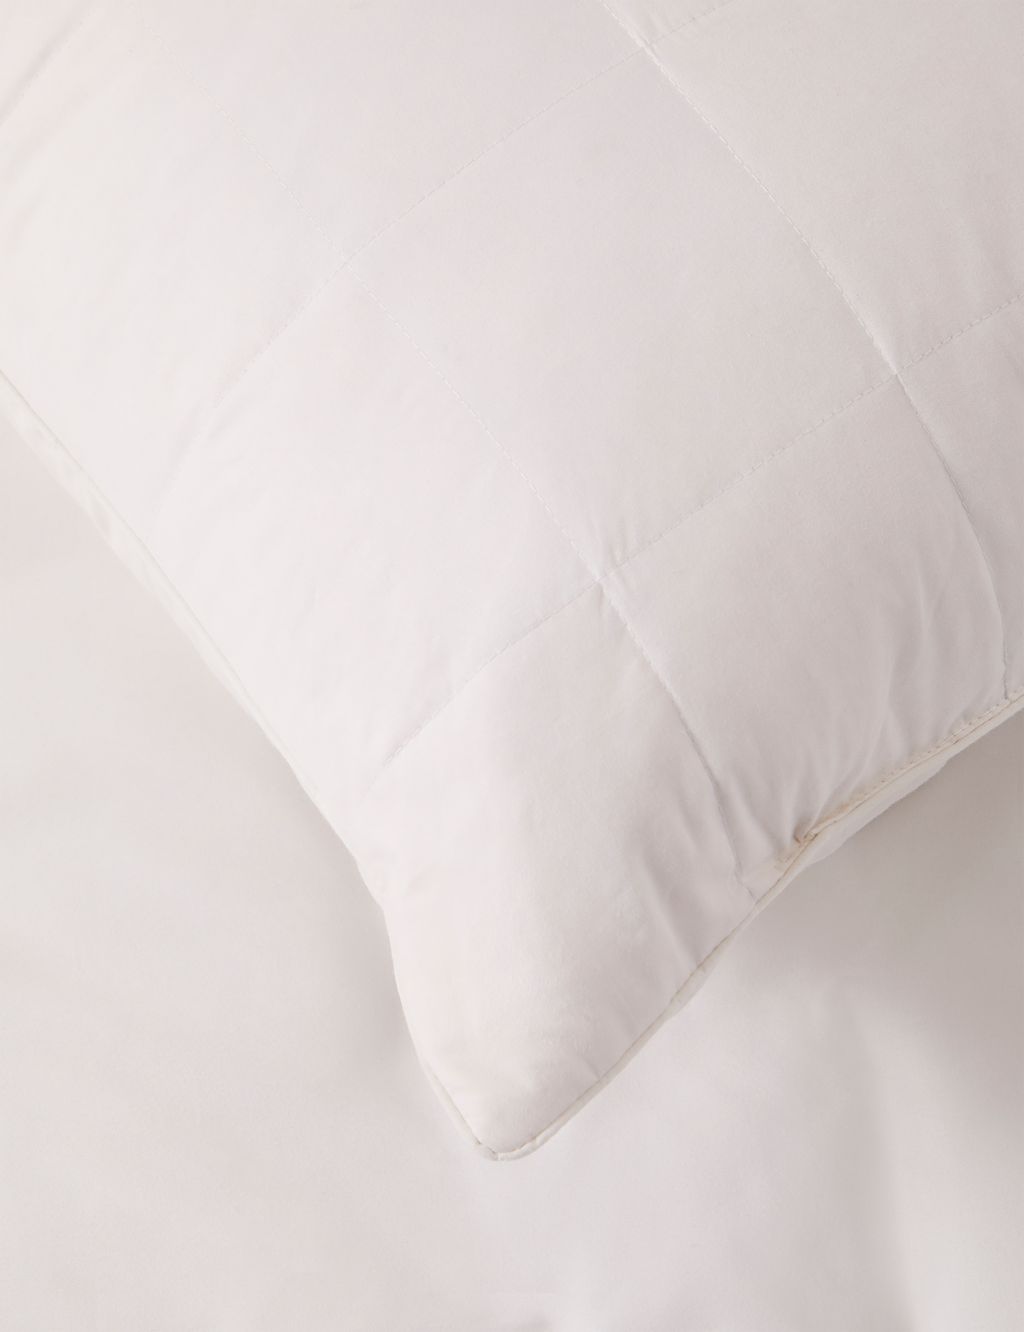 Sleep Solutions Goose Down Medium Surround Pillow image 2